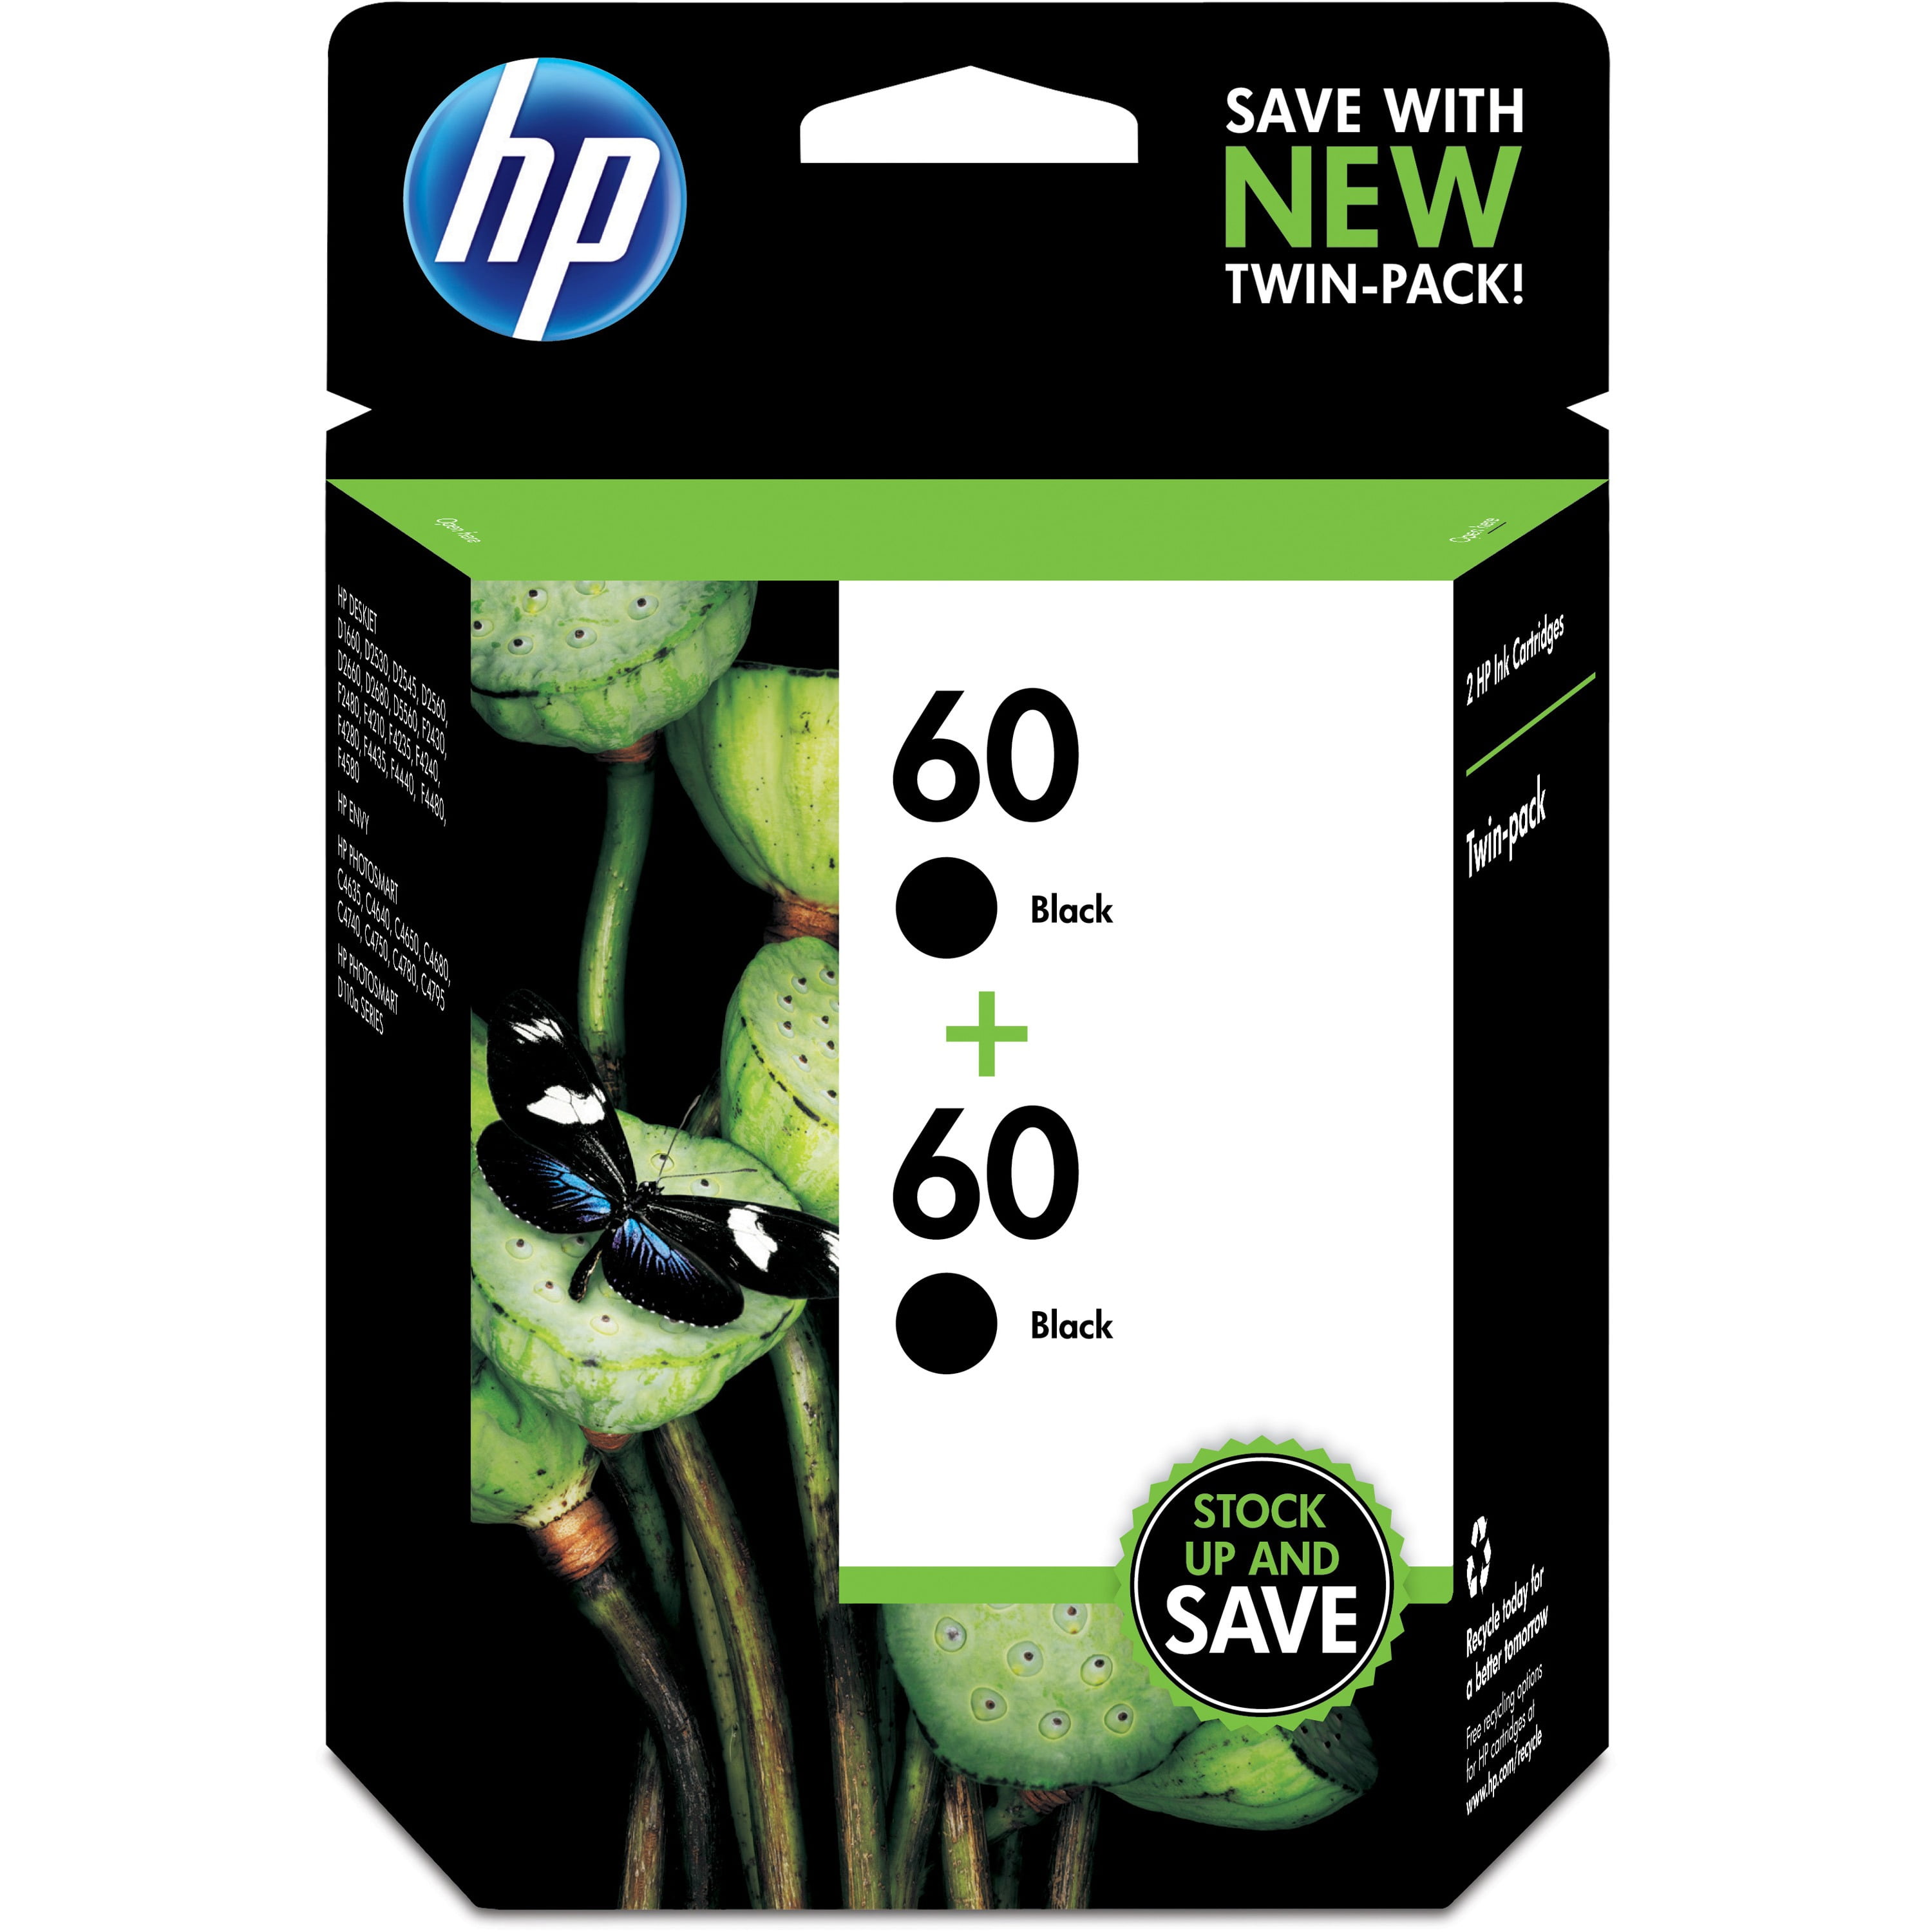 Verbazing Sturen Levendig HP 60 Ink Cartridges - Black, 2 Cartridges (CZ071FN) - Walmart.com